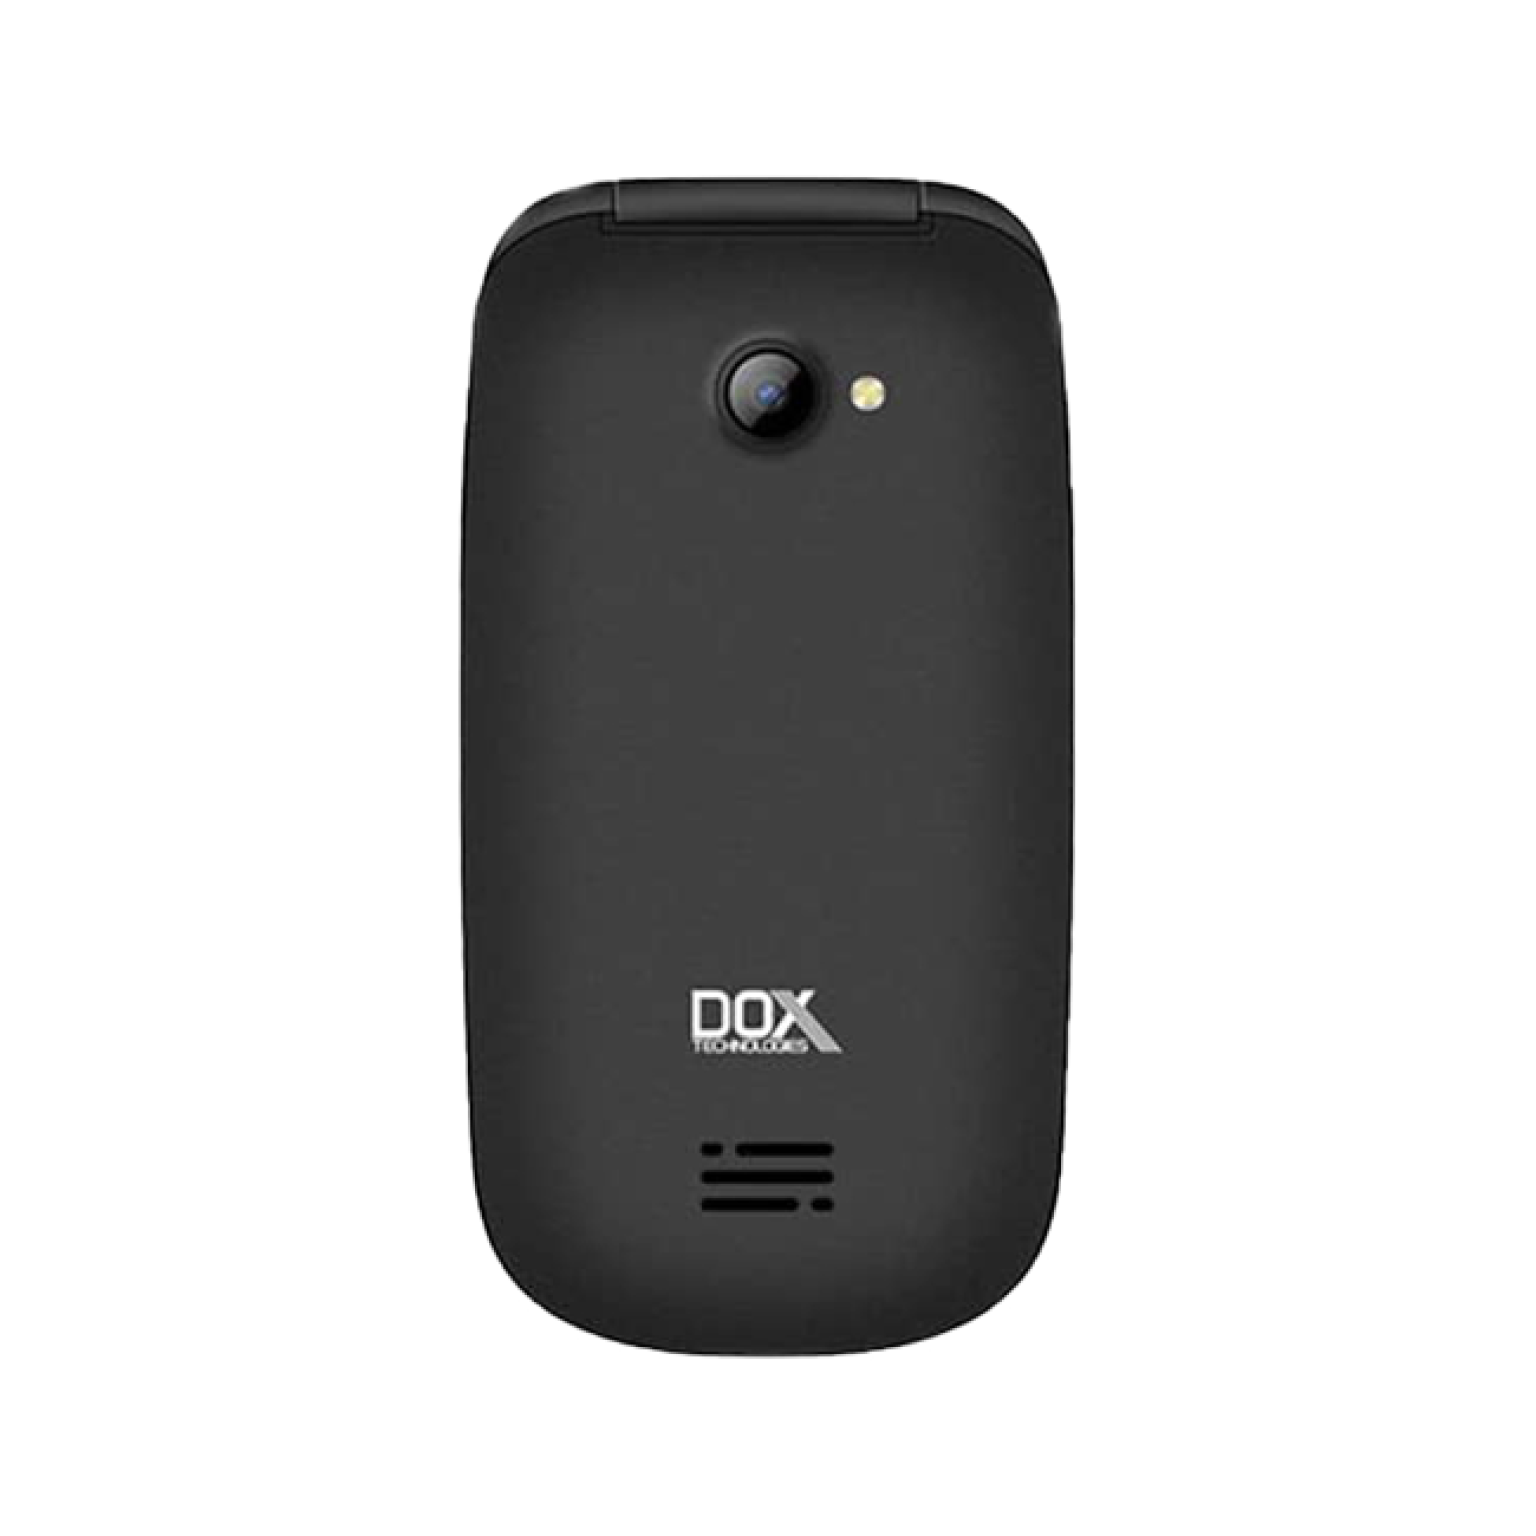 Dox V435 mobile phone black.png 1